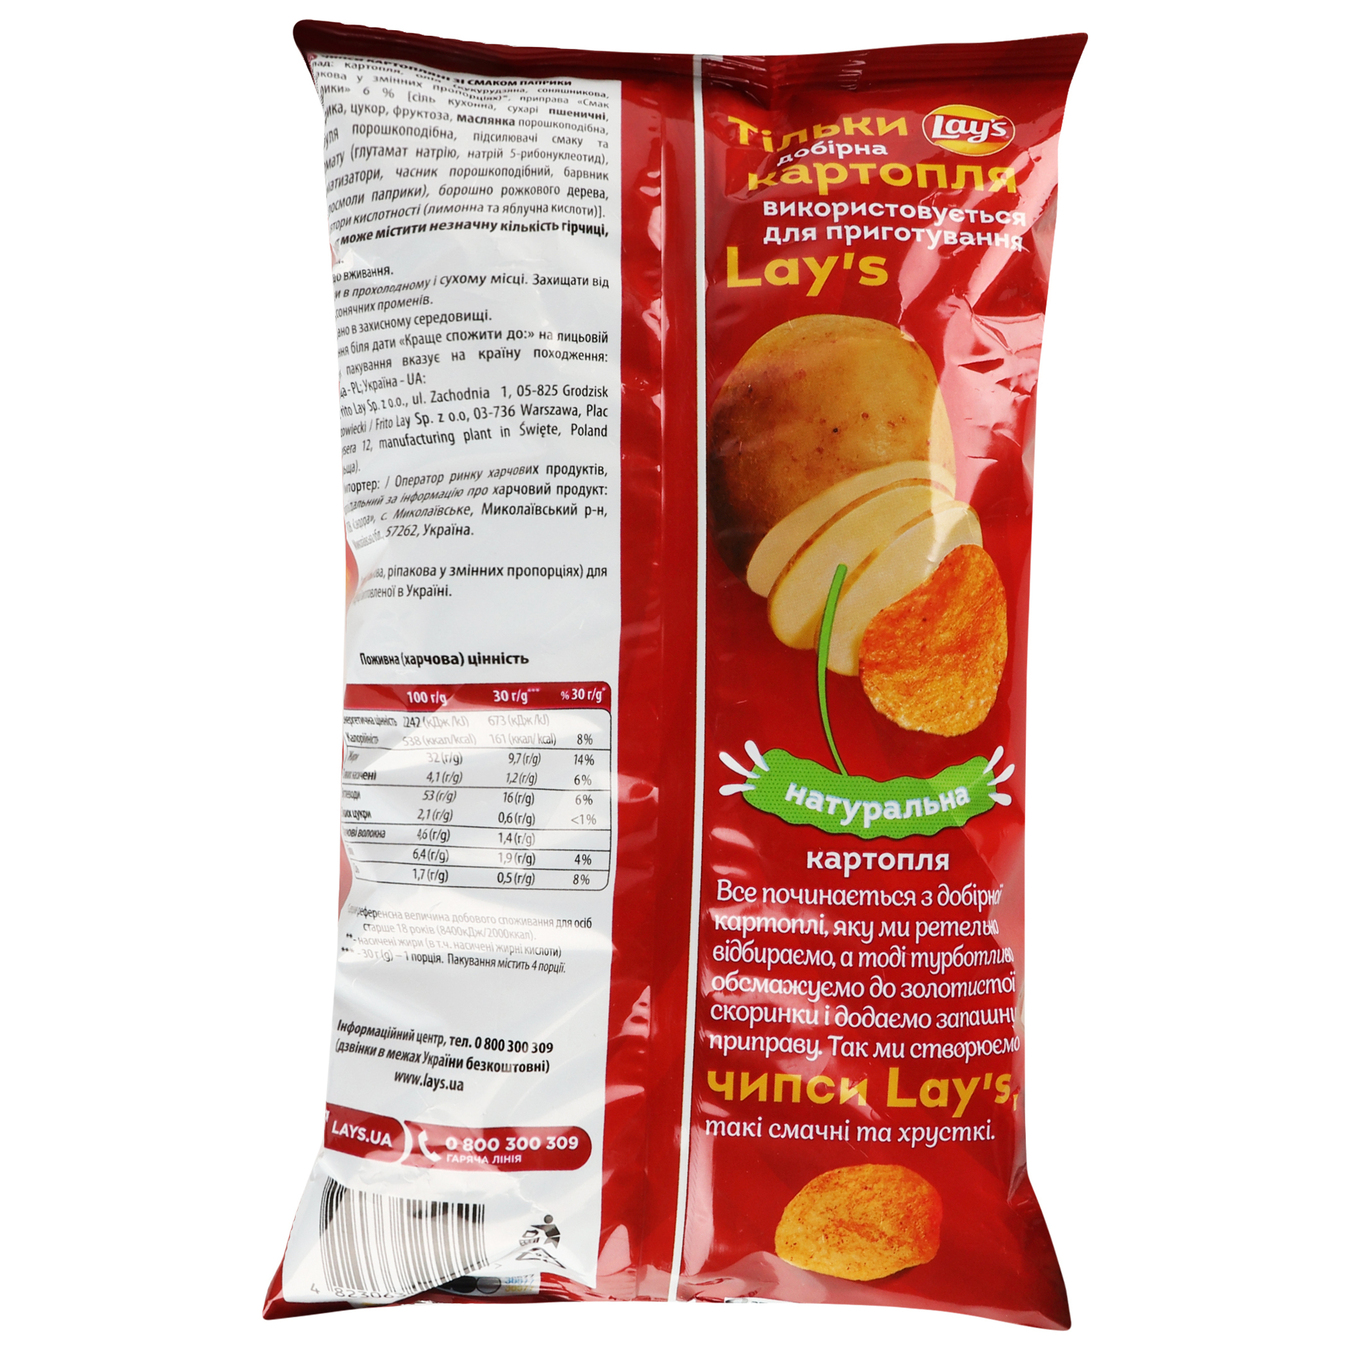 Potato chips Lay's paprika flavor 120g 2